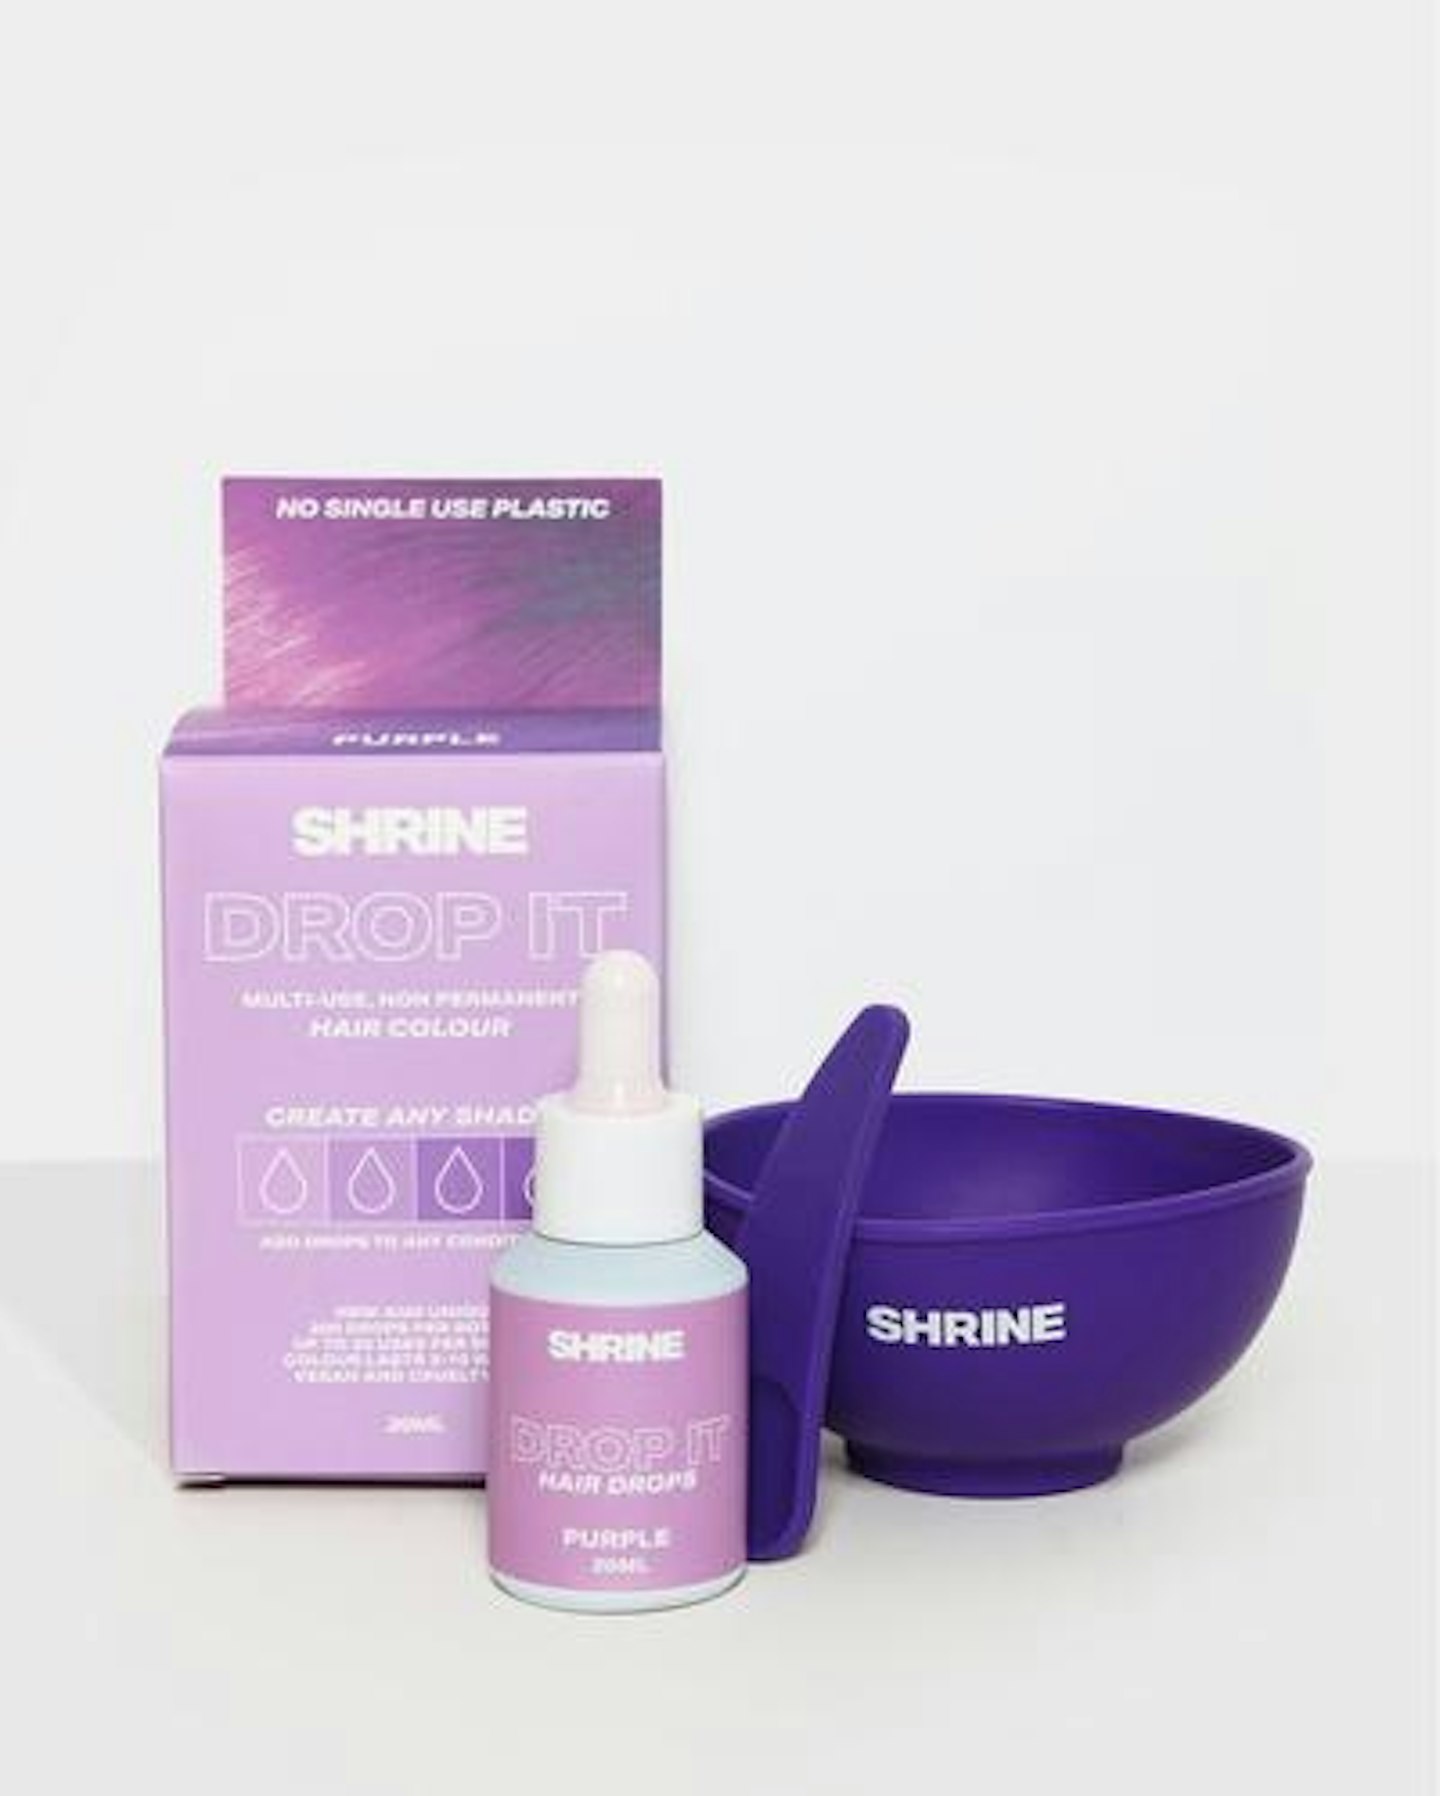 SHRINE Drop It Hair Colourant Purple, £12.99